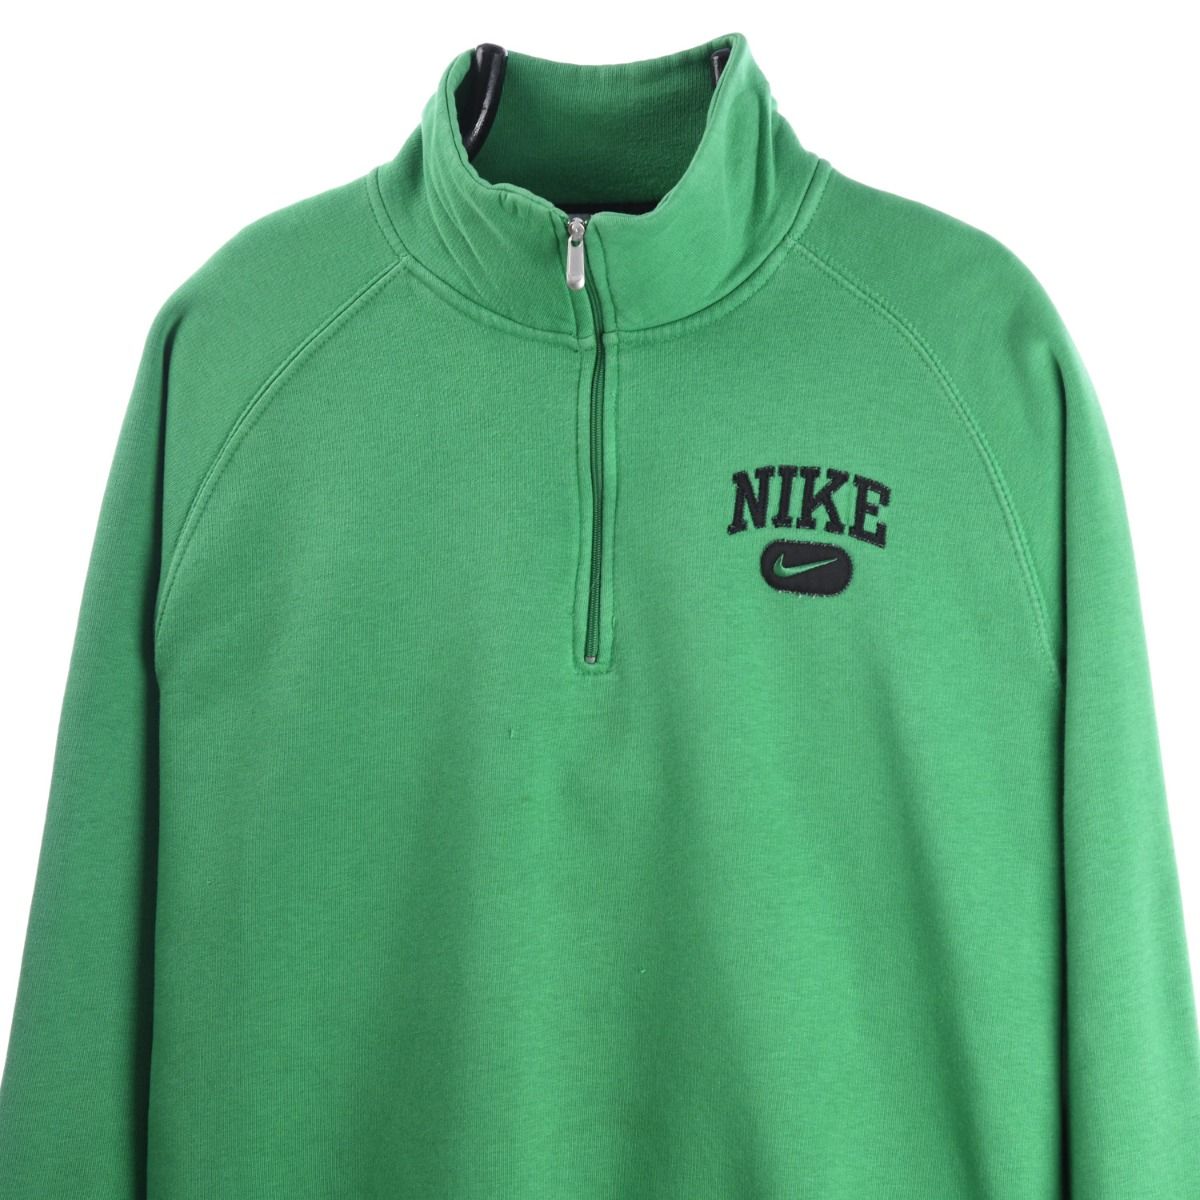 Nike Early 2000s Quarter-Zip Sweatshirt